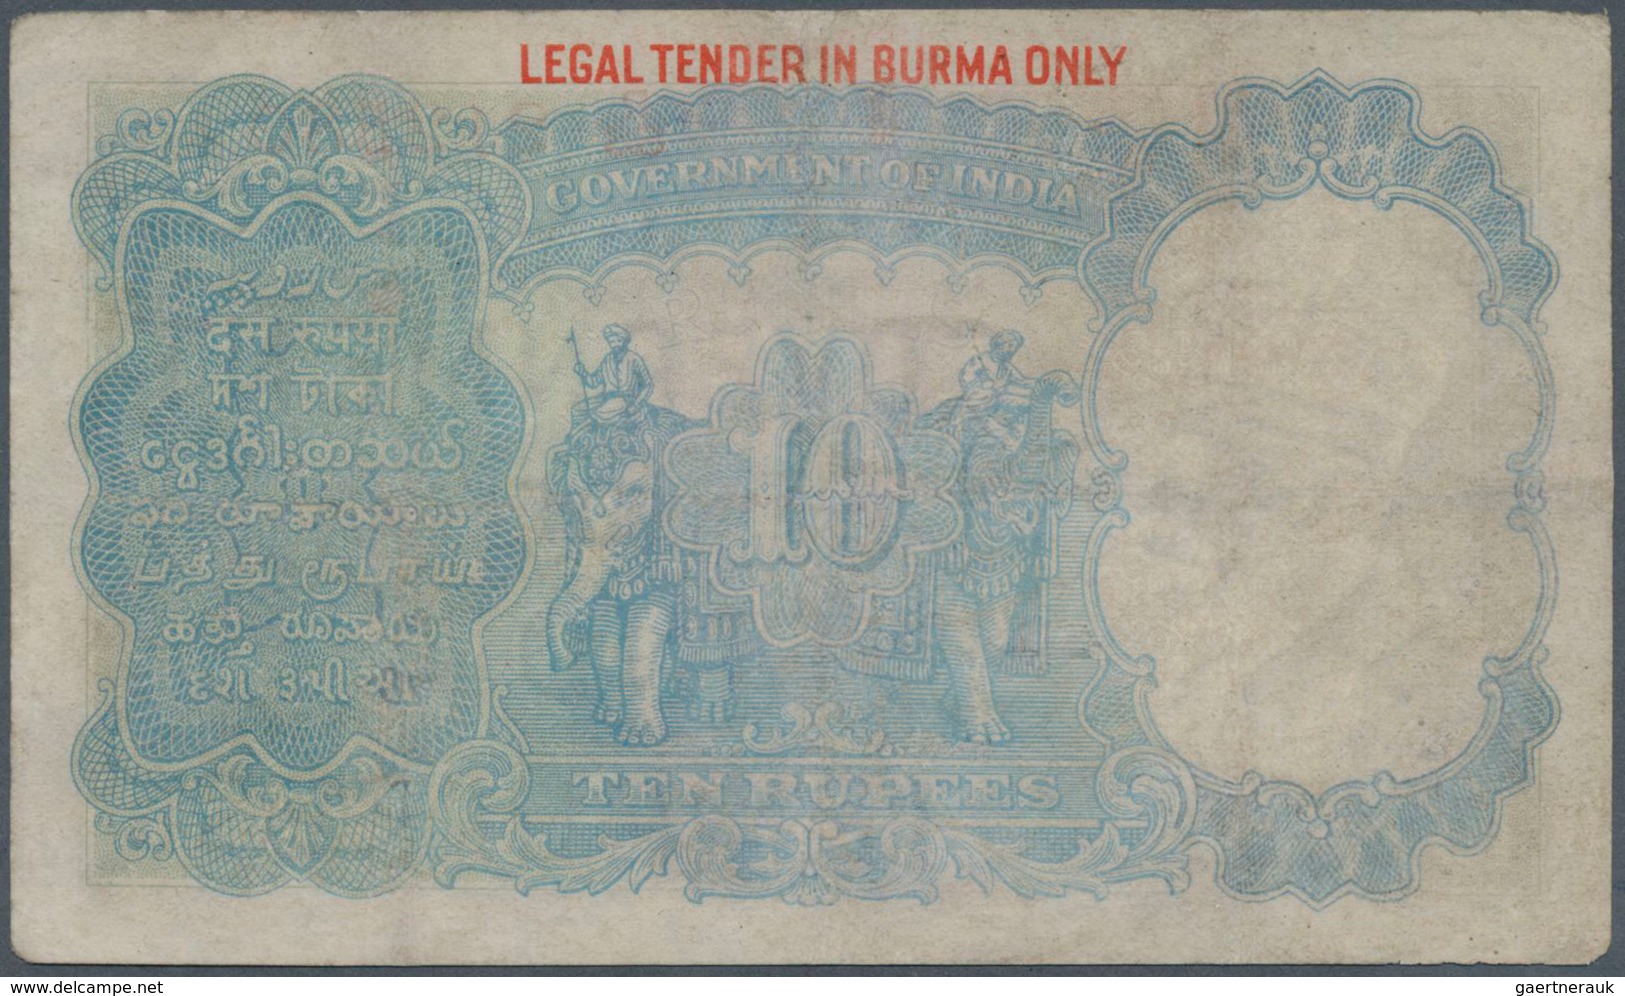 01224 Burma / Myanmar / Birma: 10 Rupees ND(1937) P. 2a, Pressed But Still Nice Colors, No Holes Or Tears, - Myanmar